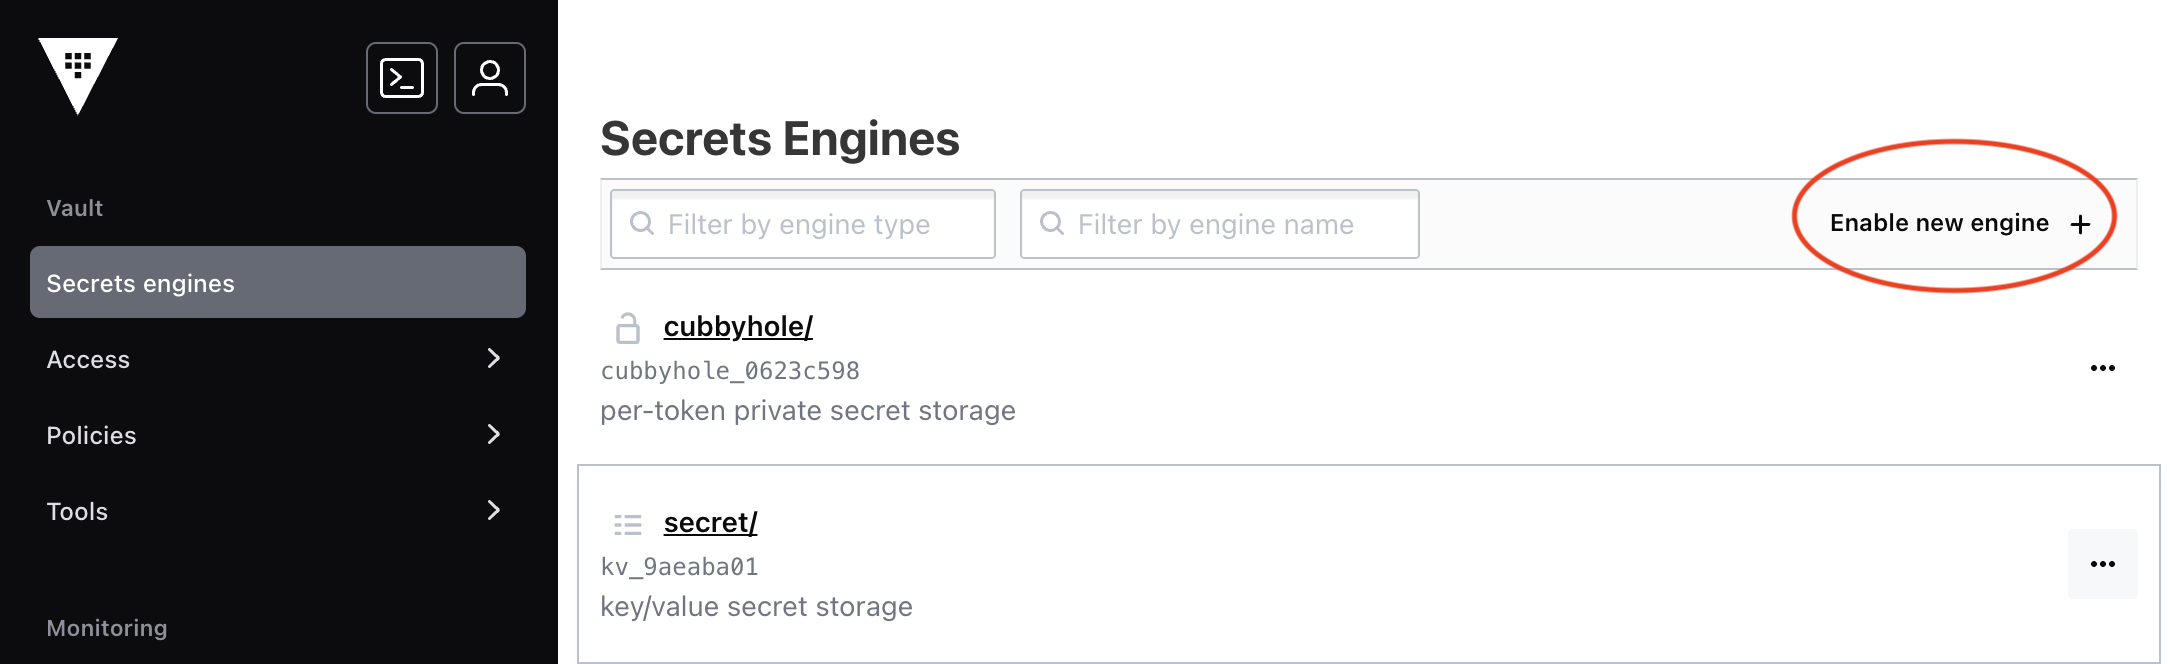 Secrets - Enable new engine